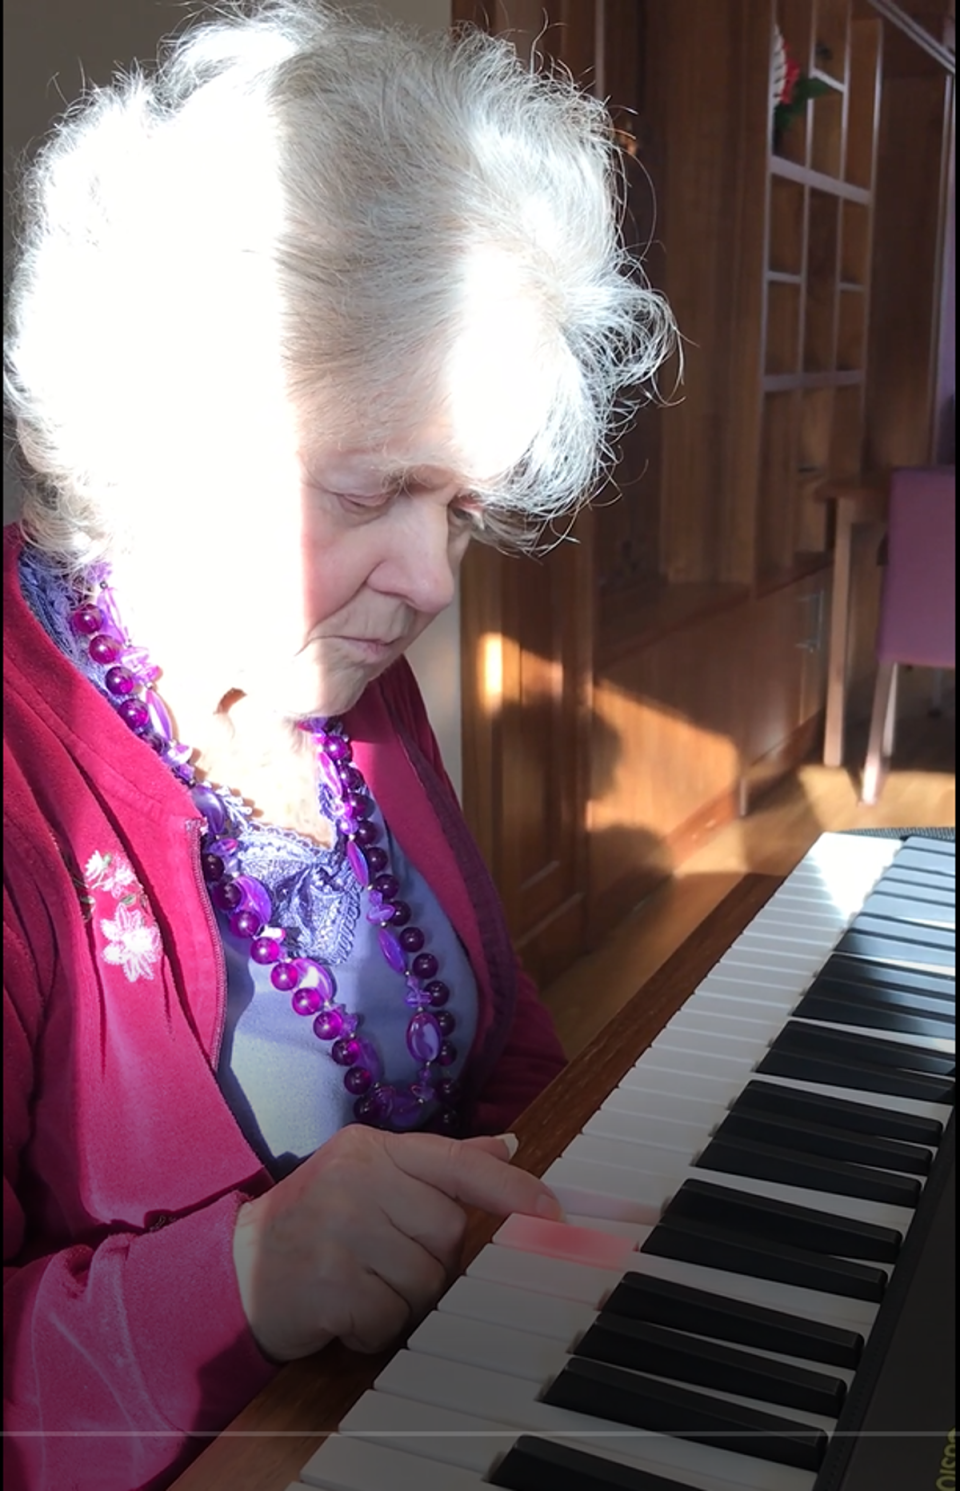 Jill playing Ave Maria on the keyboard (MHA/Casio/PA)